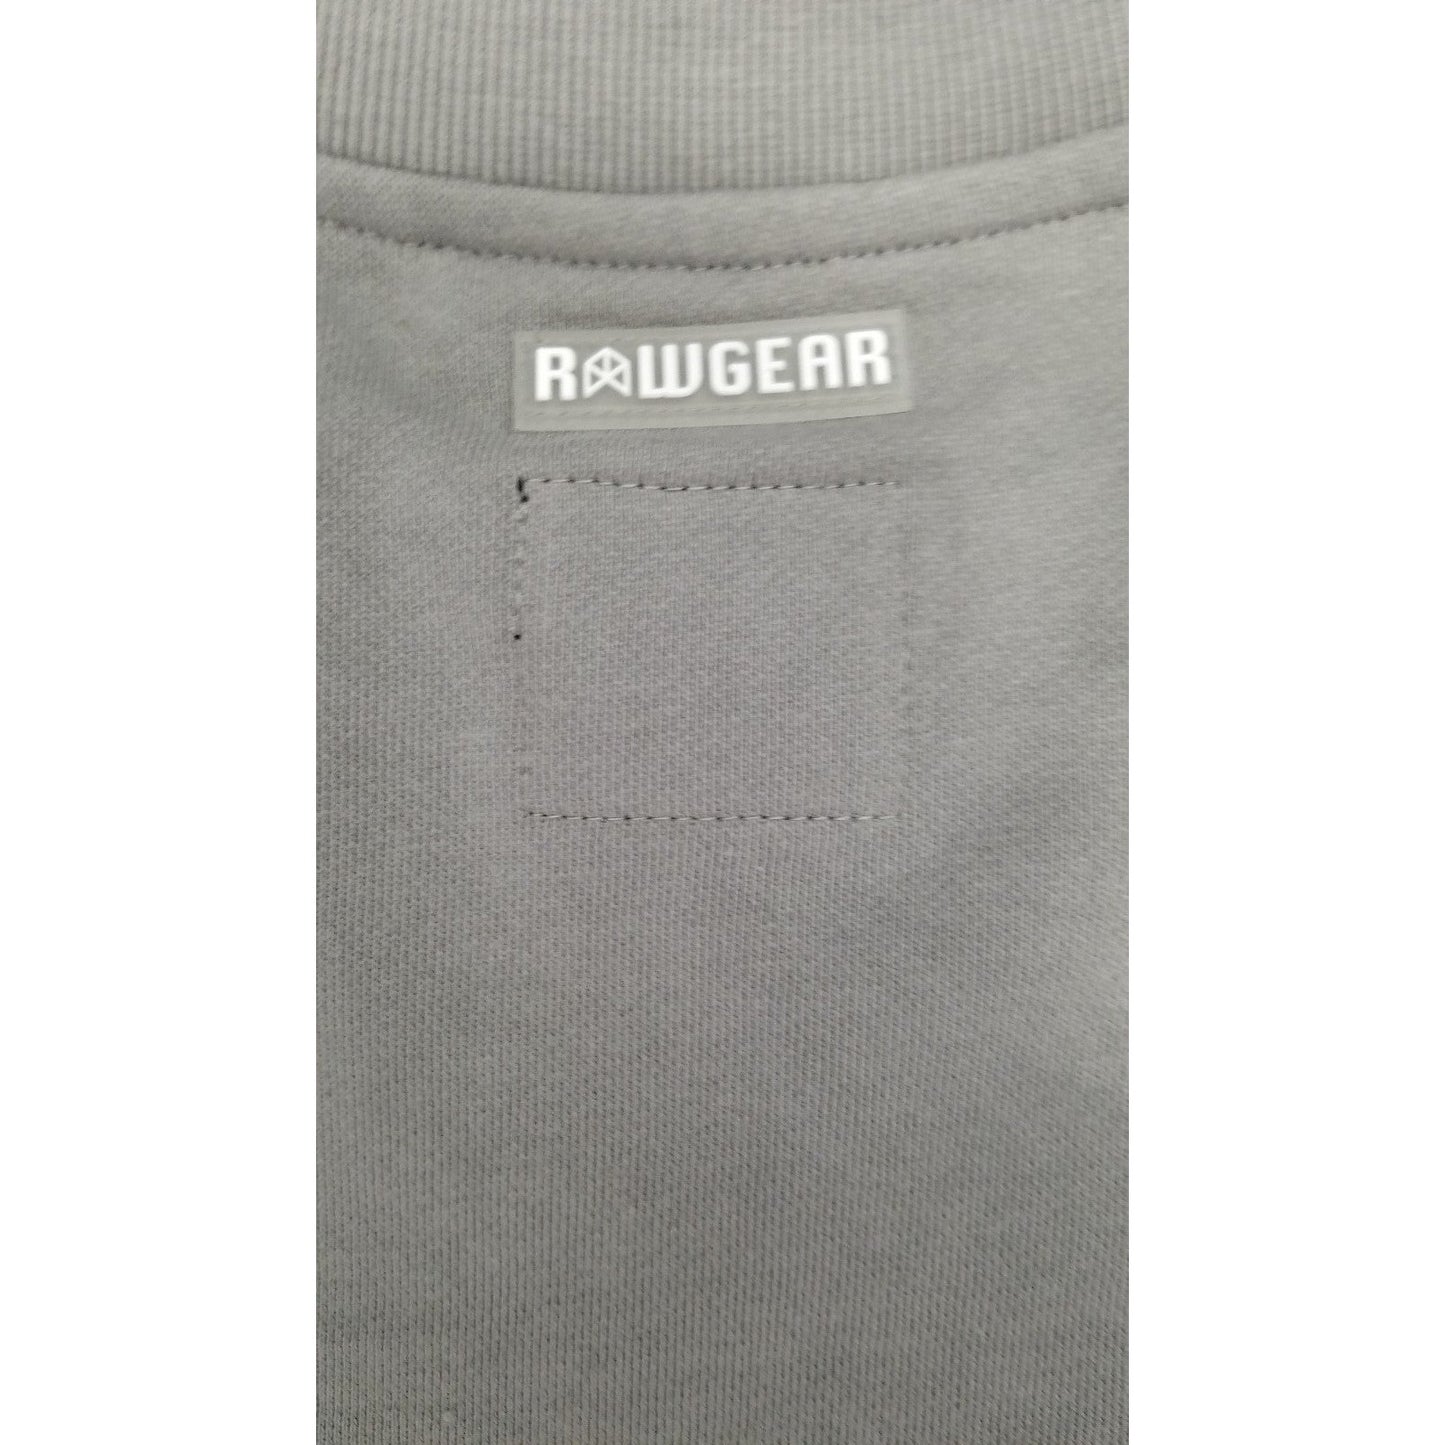 Raw Gear Sweat Shirt Grey-Size Medium